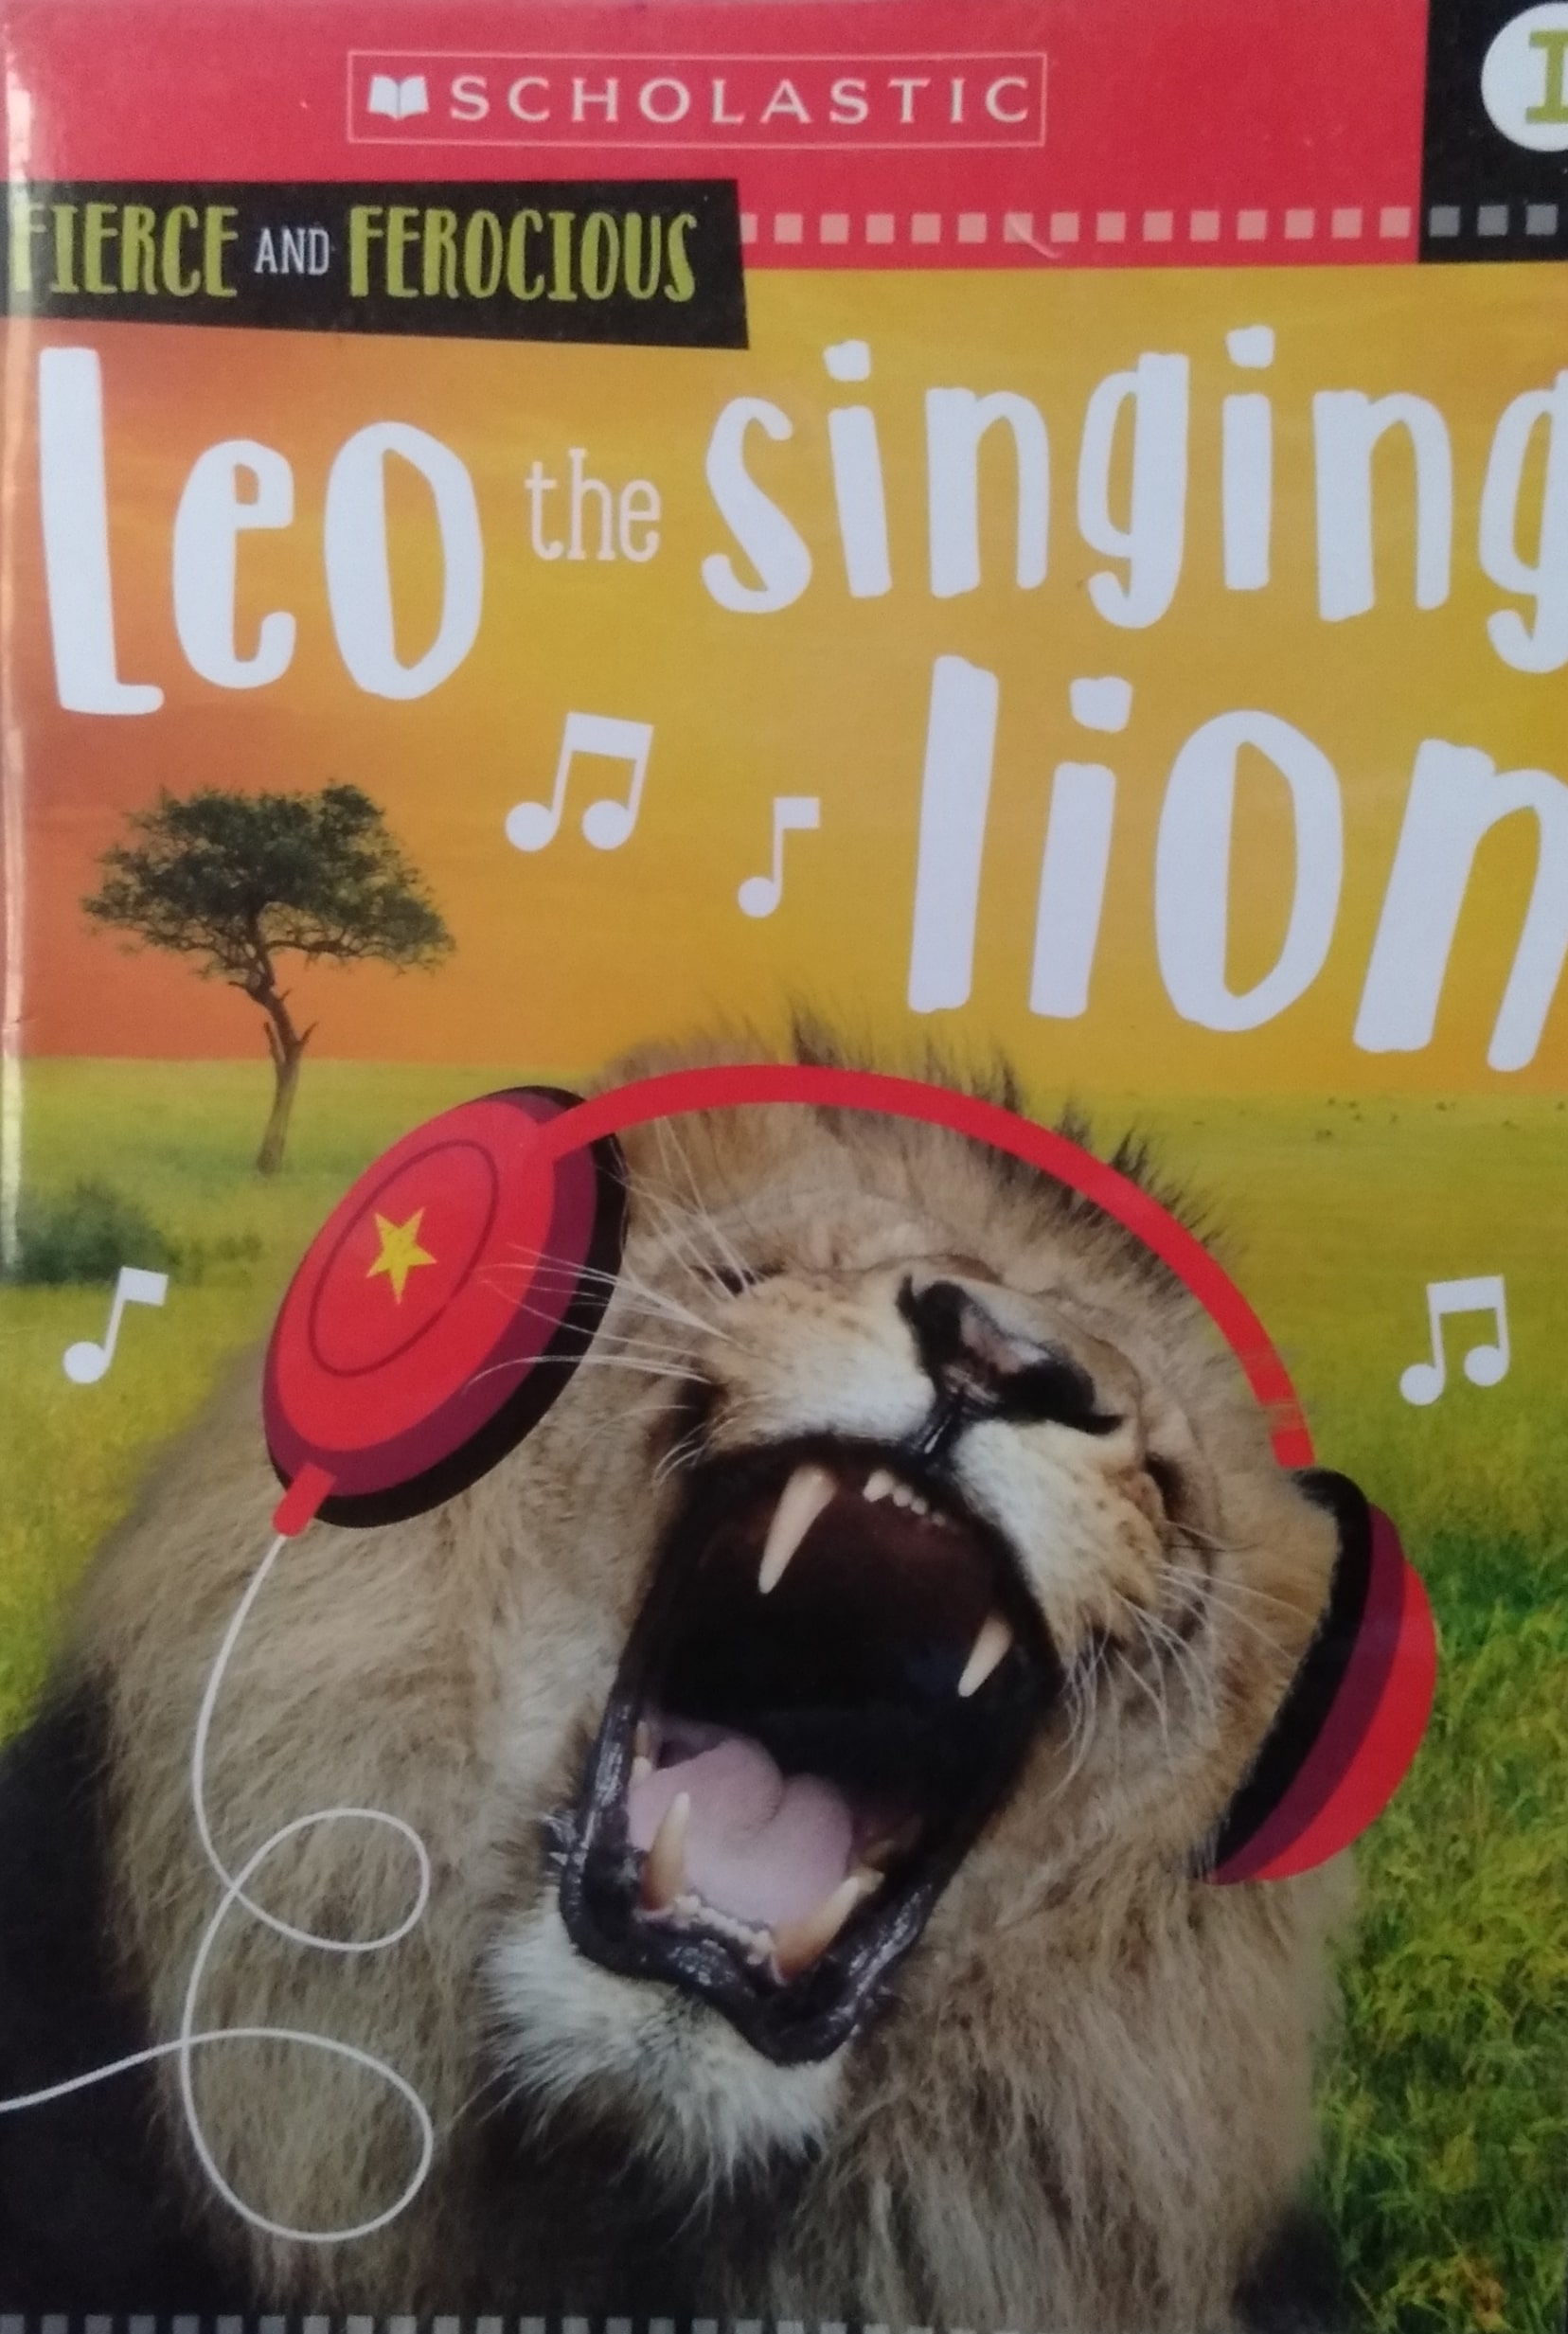 IMG : Animal Antics Fierce and Ferocious Leo the singing lion